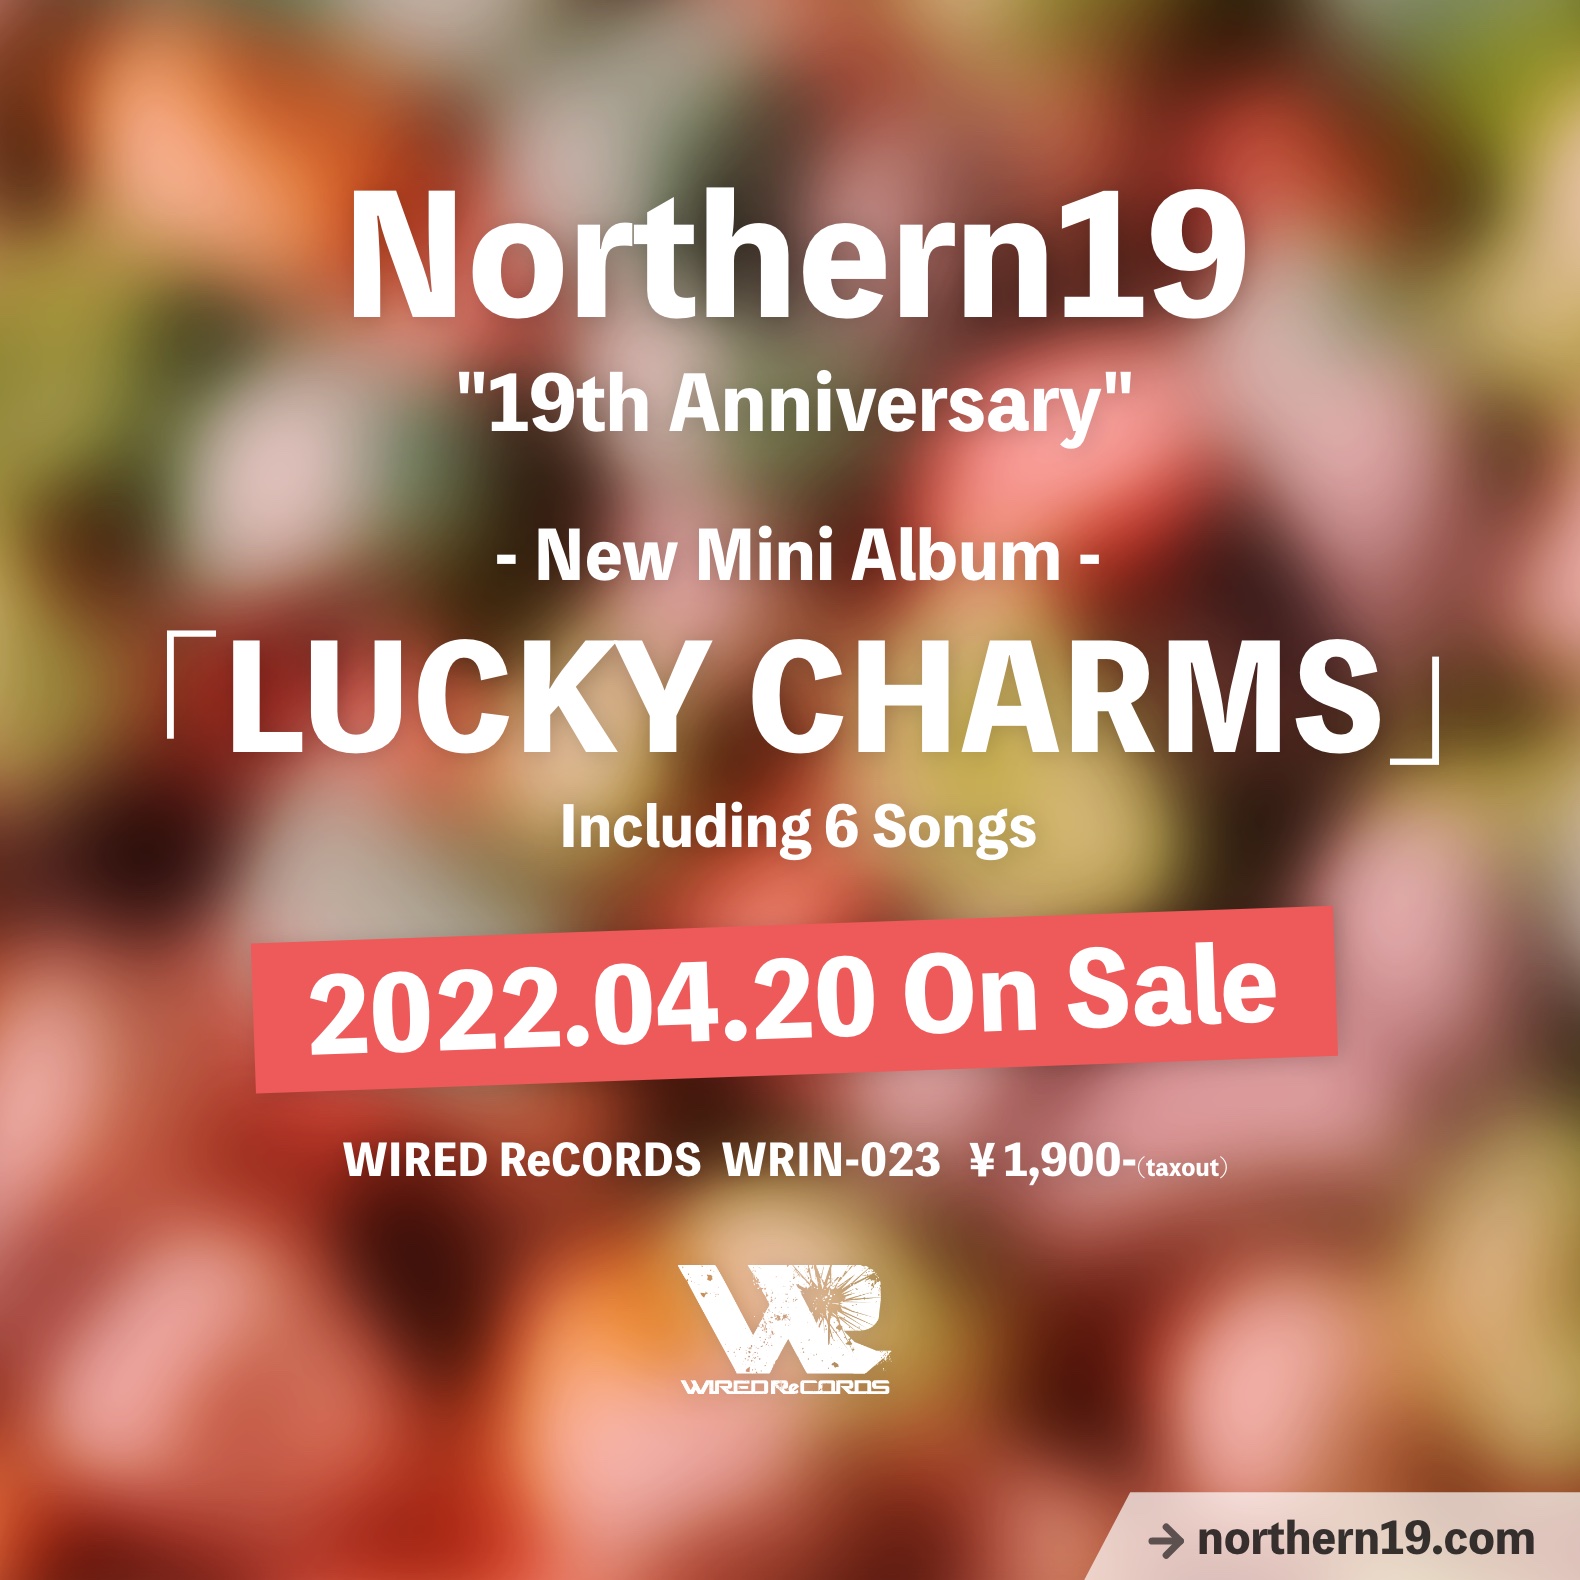 Northern19 New Mini lbum LUCKY CHARMS